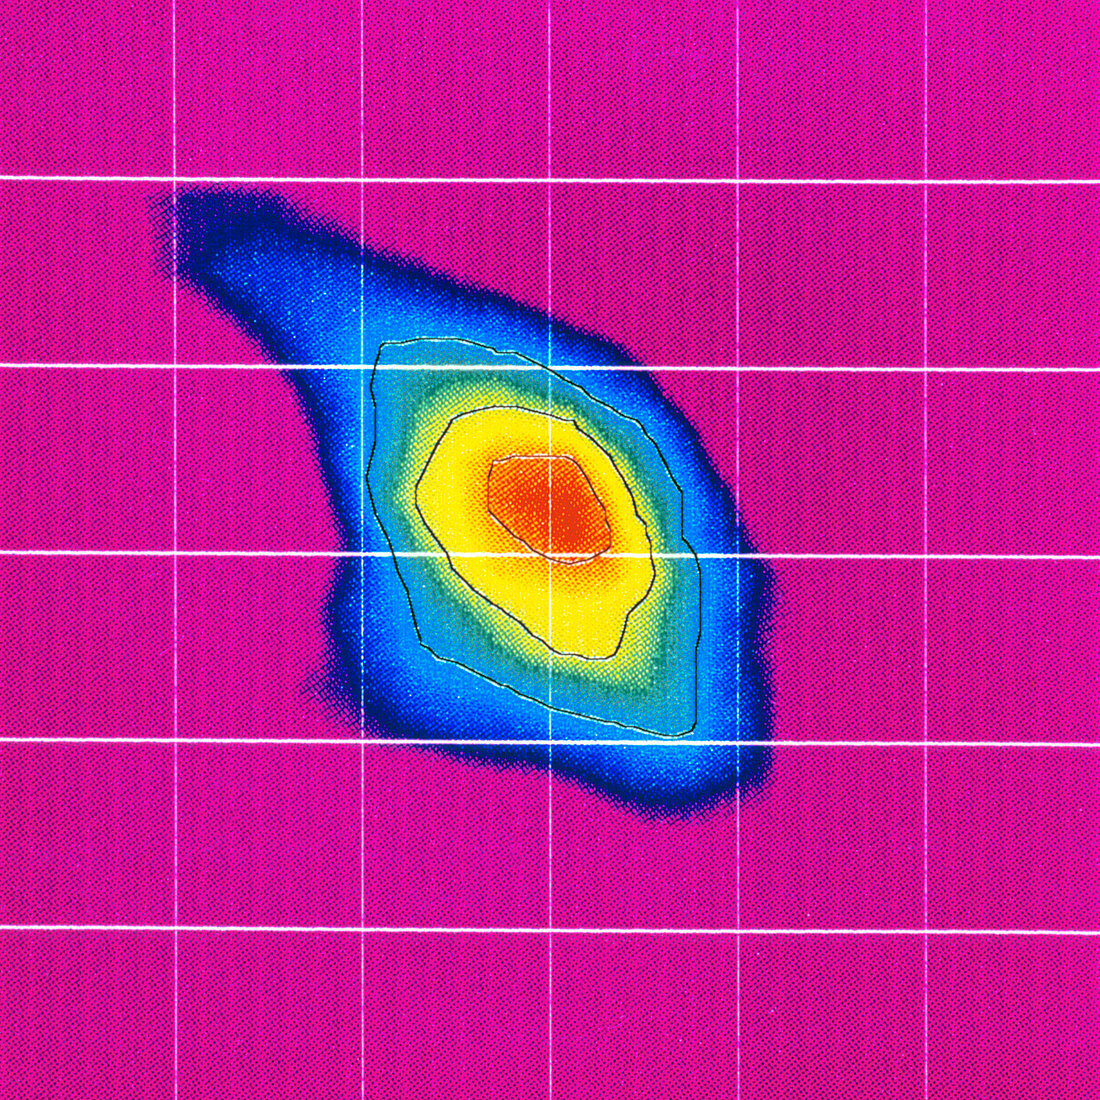 Coloured image of a gamma-ray burst